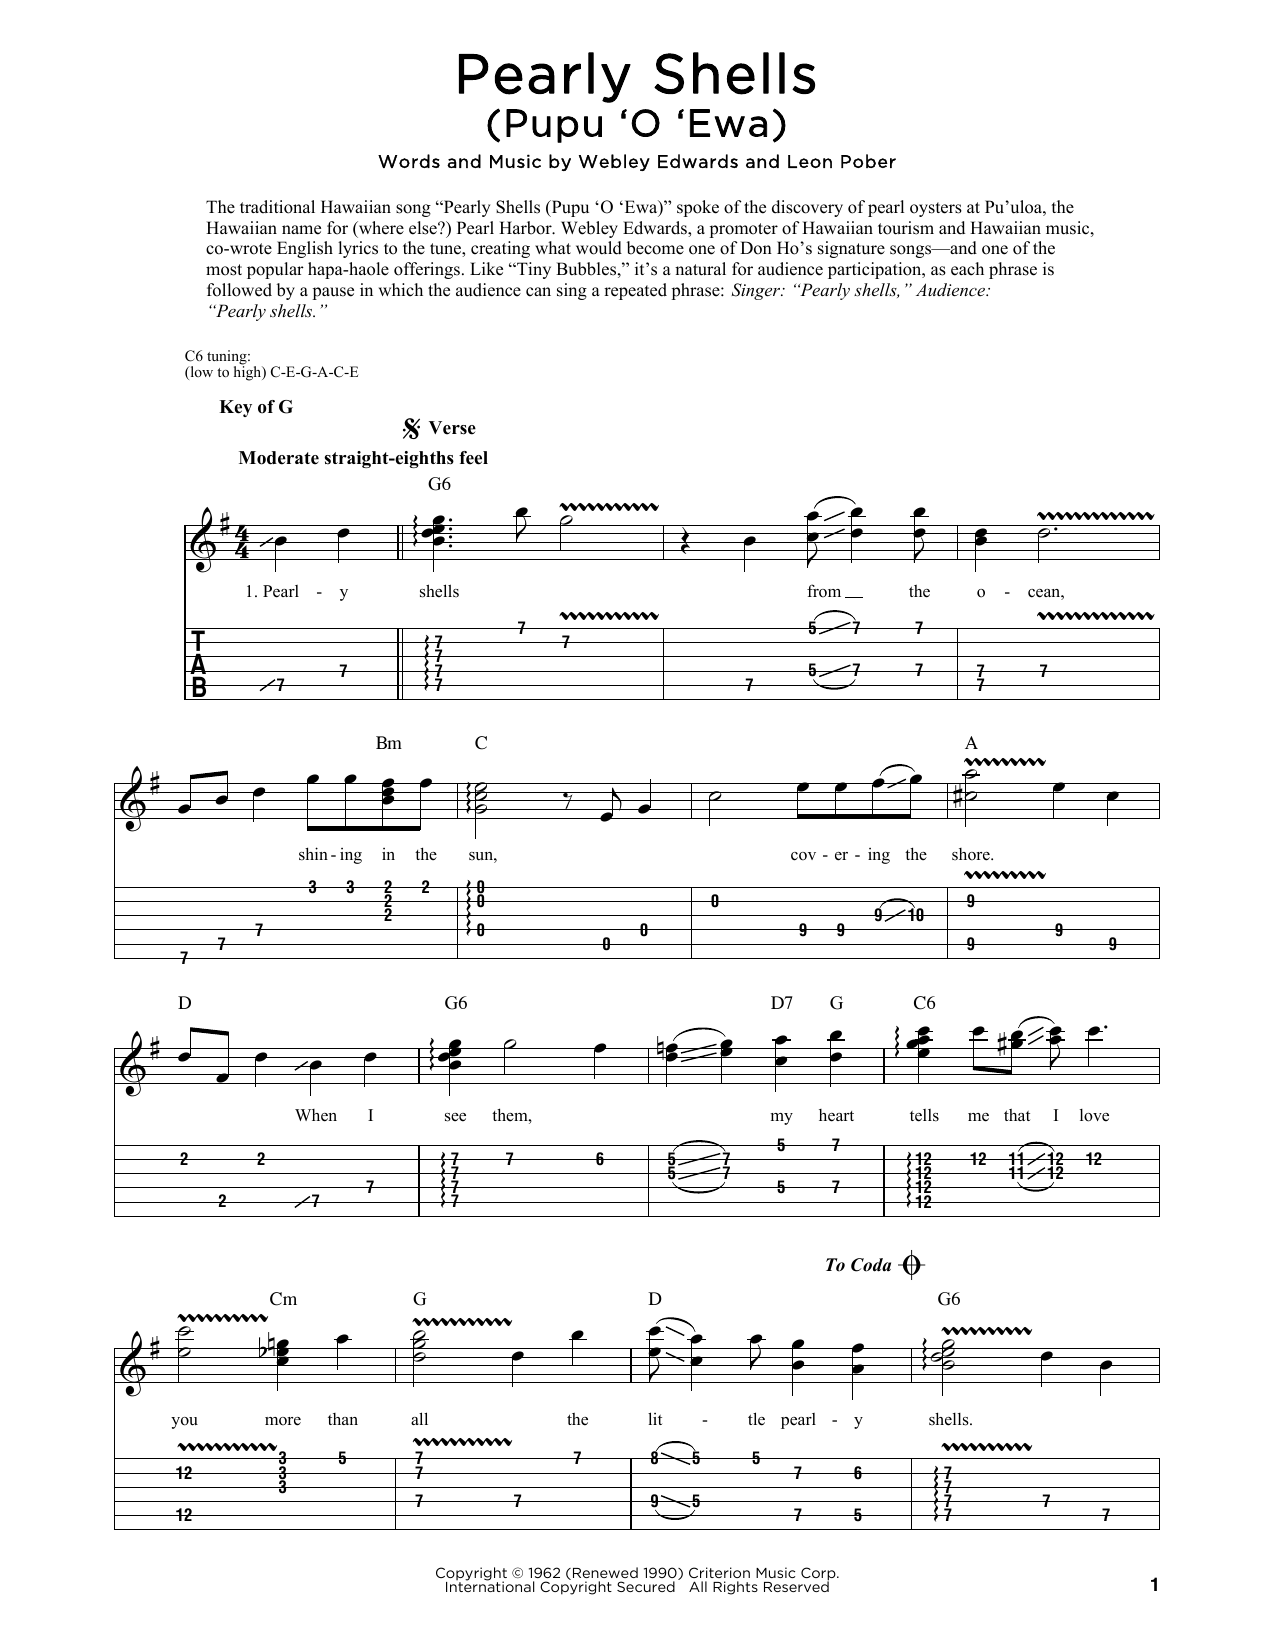 Webley Edwards Pearly Shells (Pupu O Ewa) (arr. Fred Sokolow) Sheet Music Notes & Chords for Dobro - Download or Print PDF